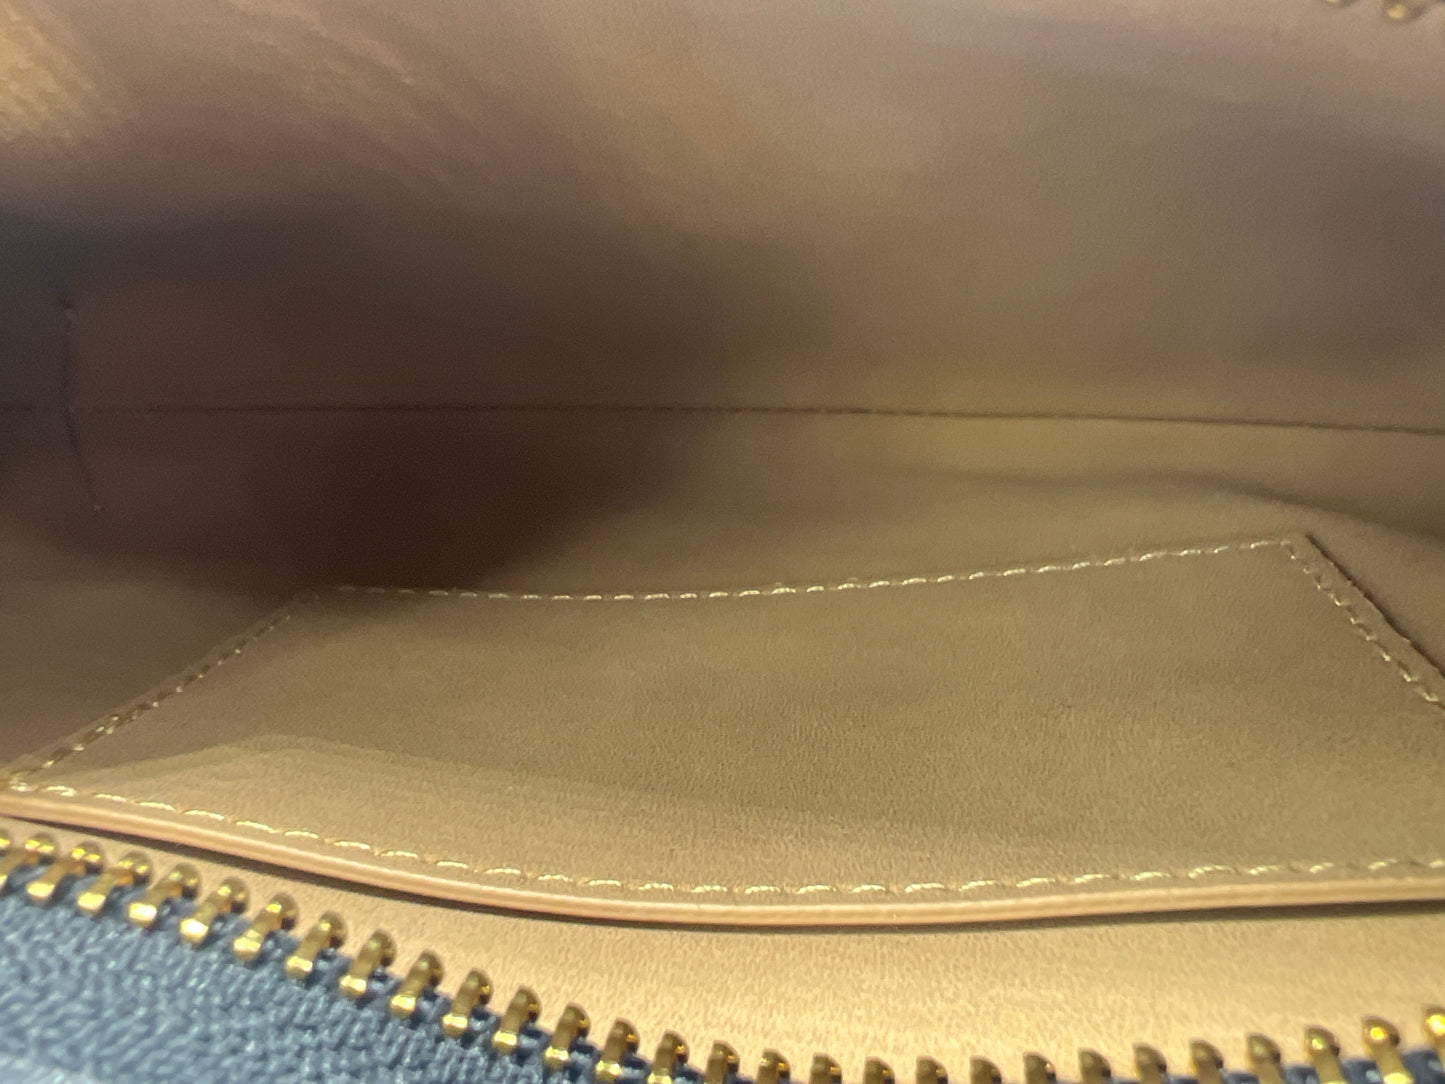 New! Belt Bag Designer By Michael Kors  Size: Medium